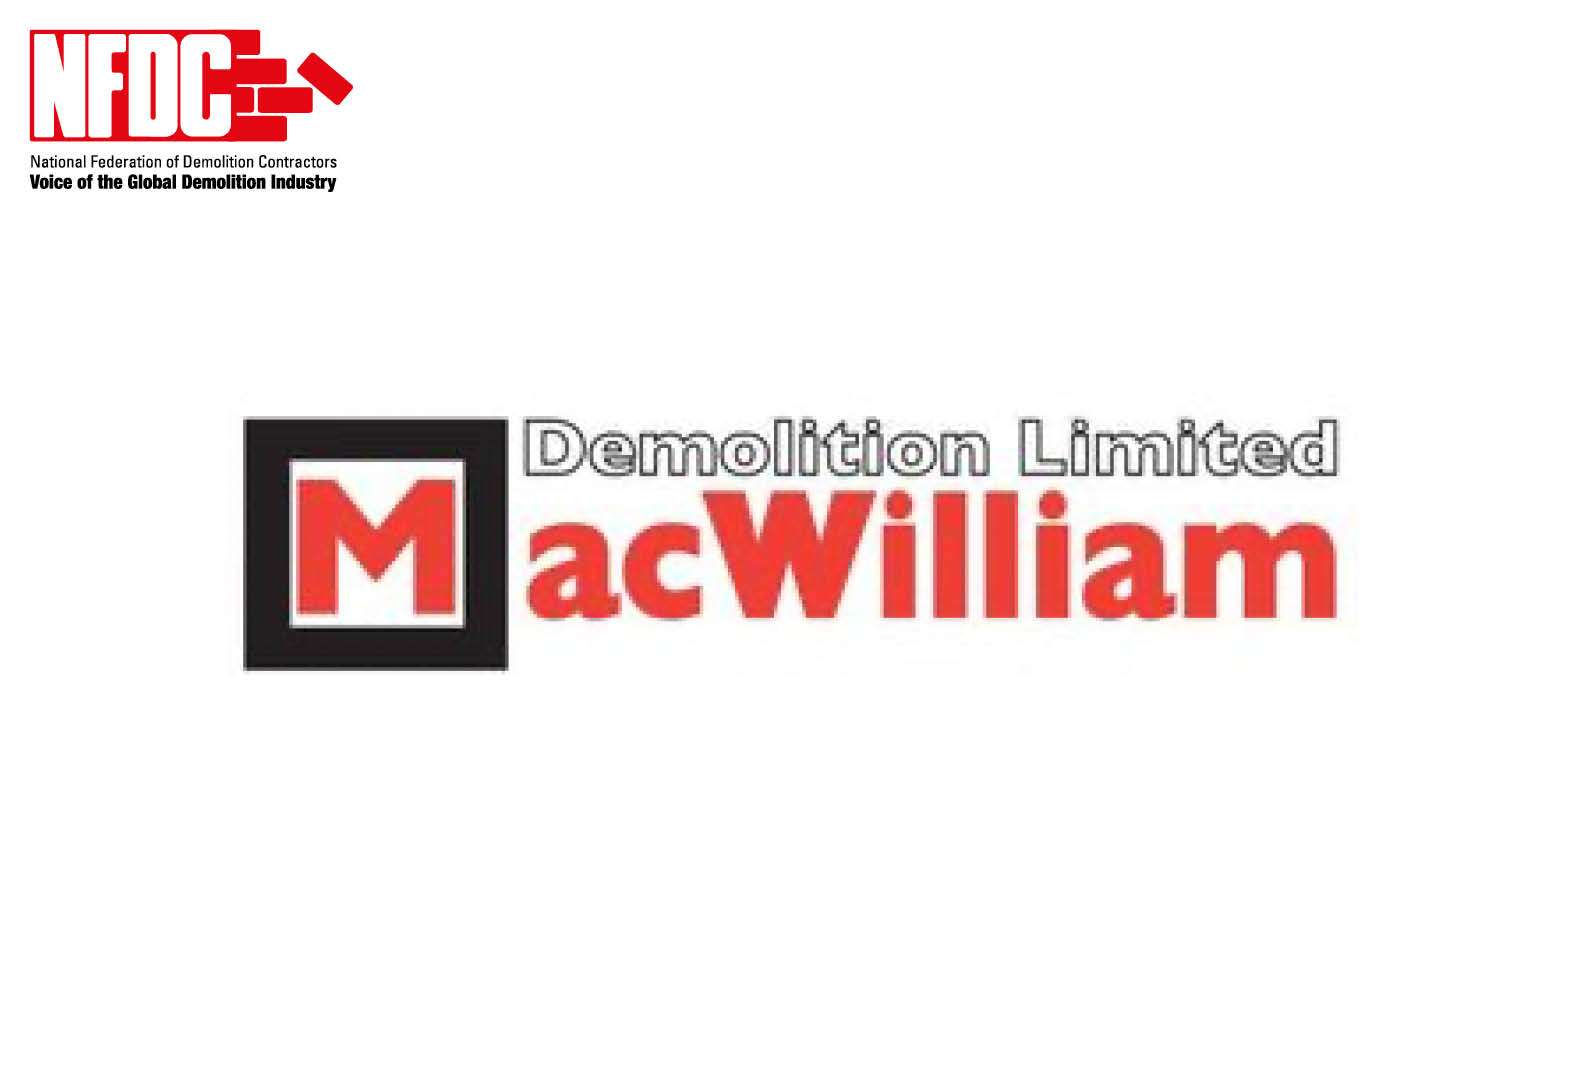 MacWilliam Demolition Ltd